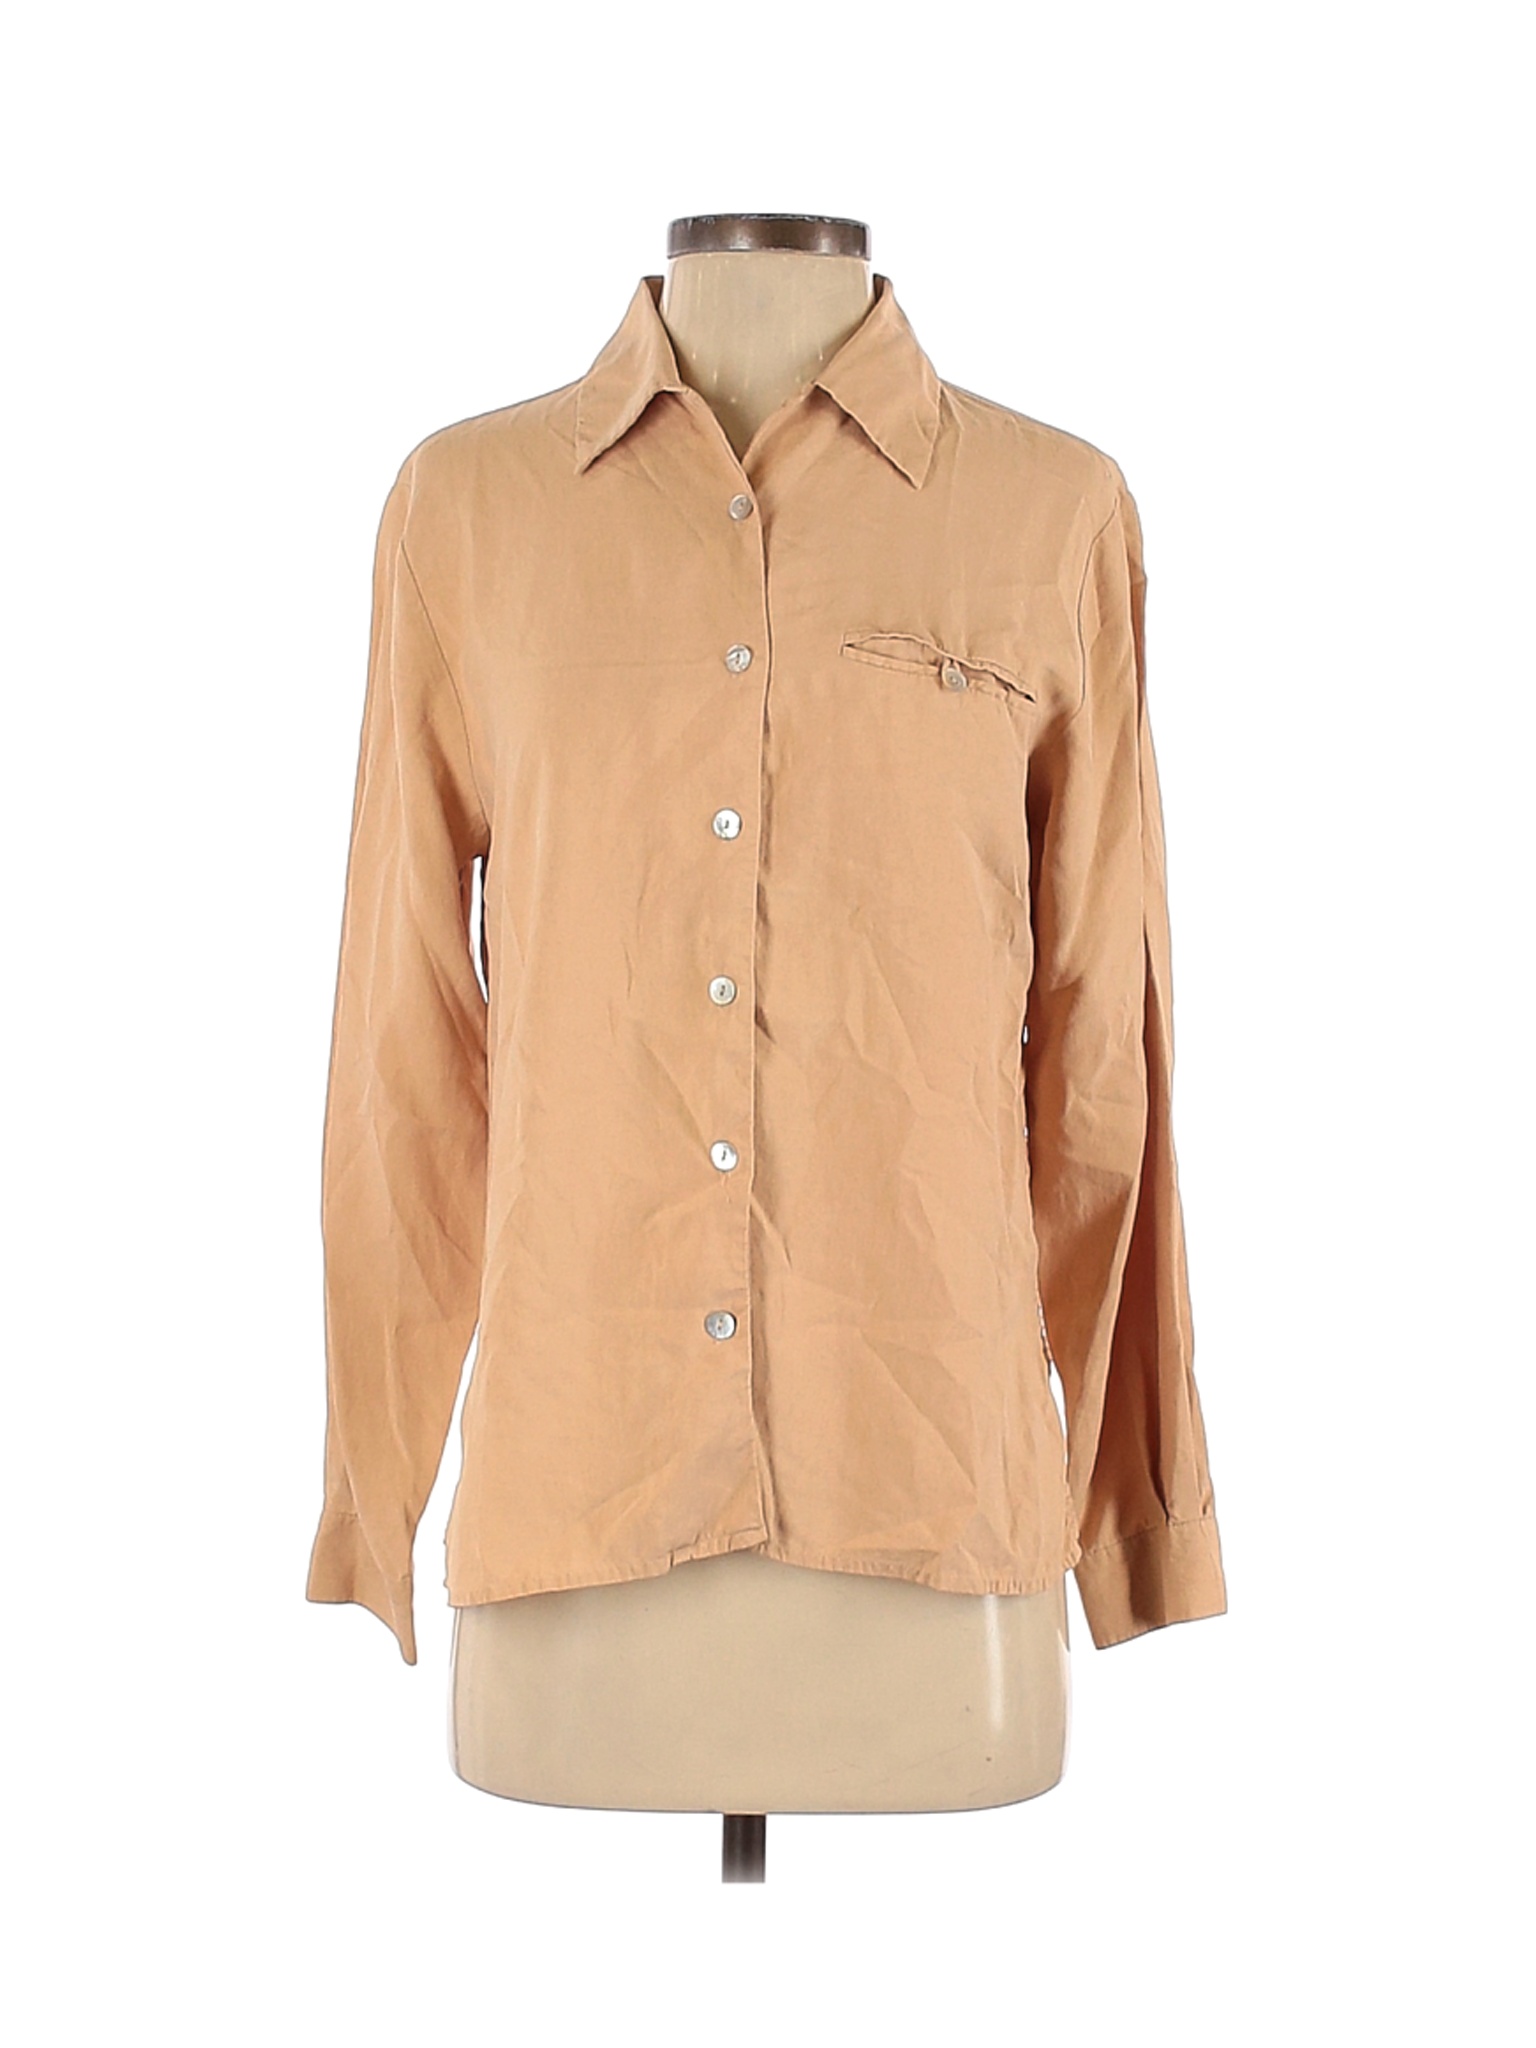 DressBarn Women Brown Long Sleeve Silk Top S | eBay